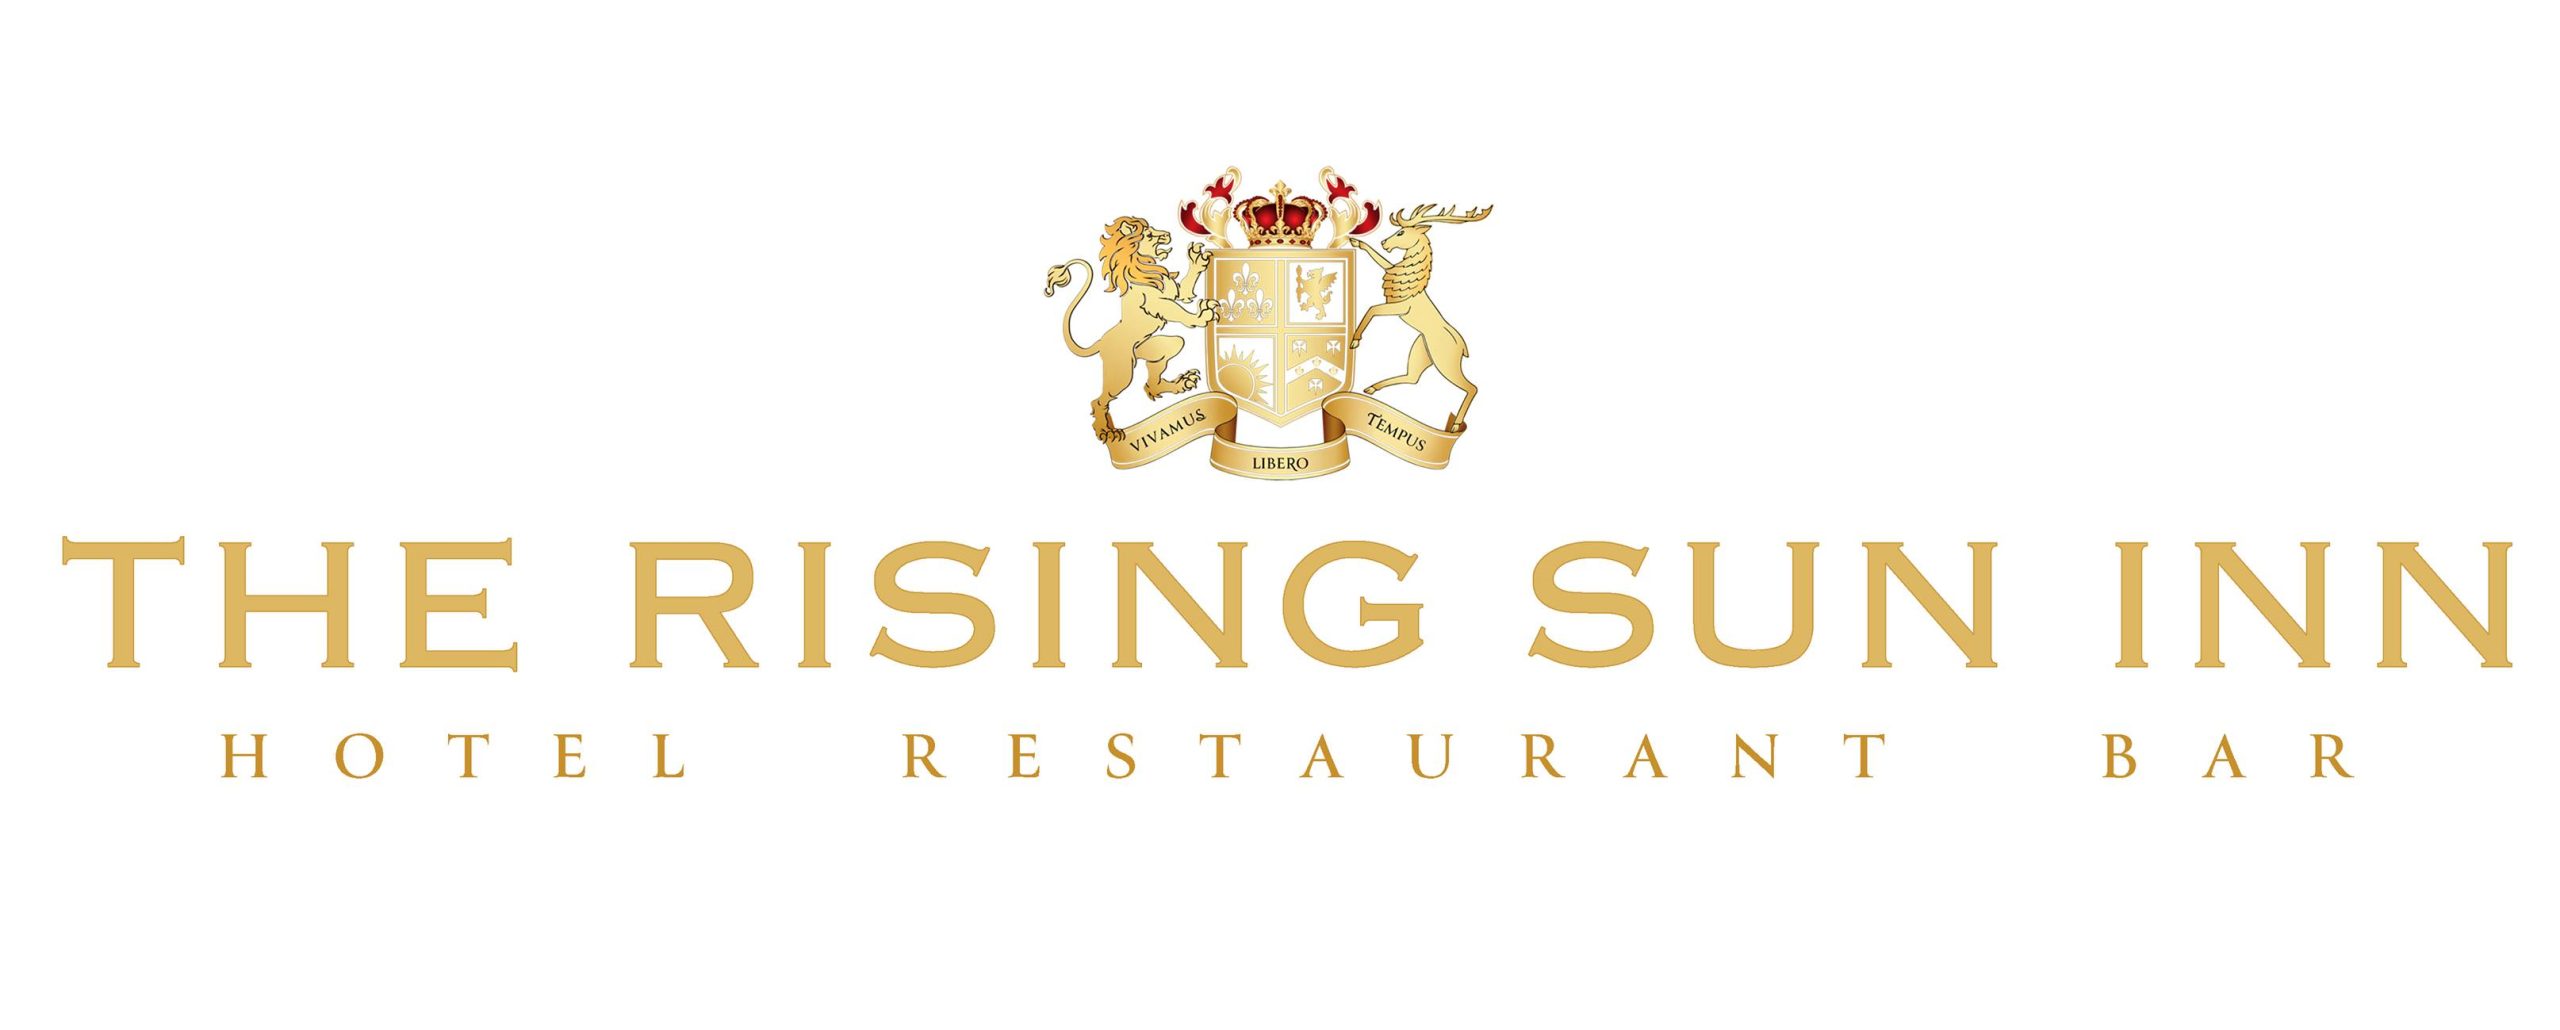 The Rising Sun cover logo